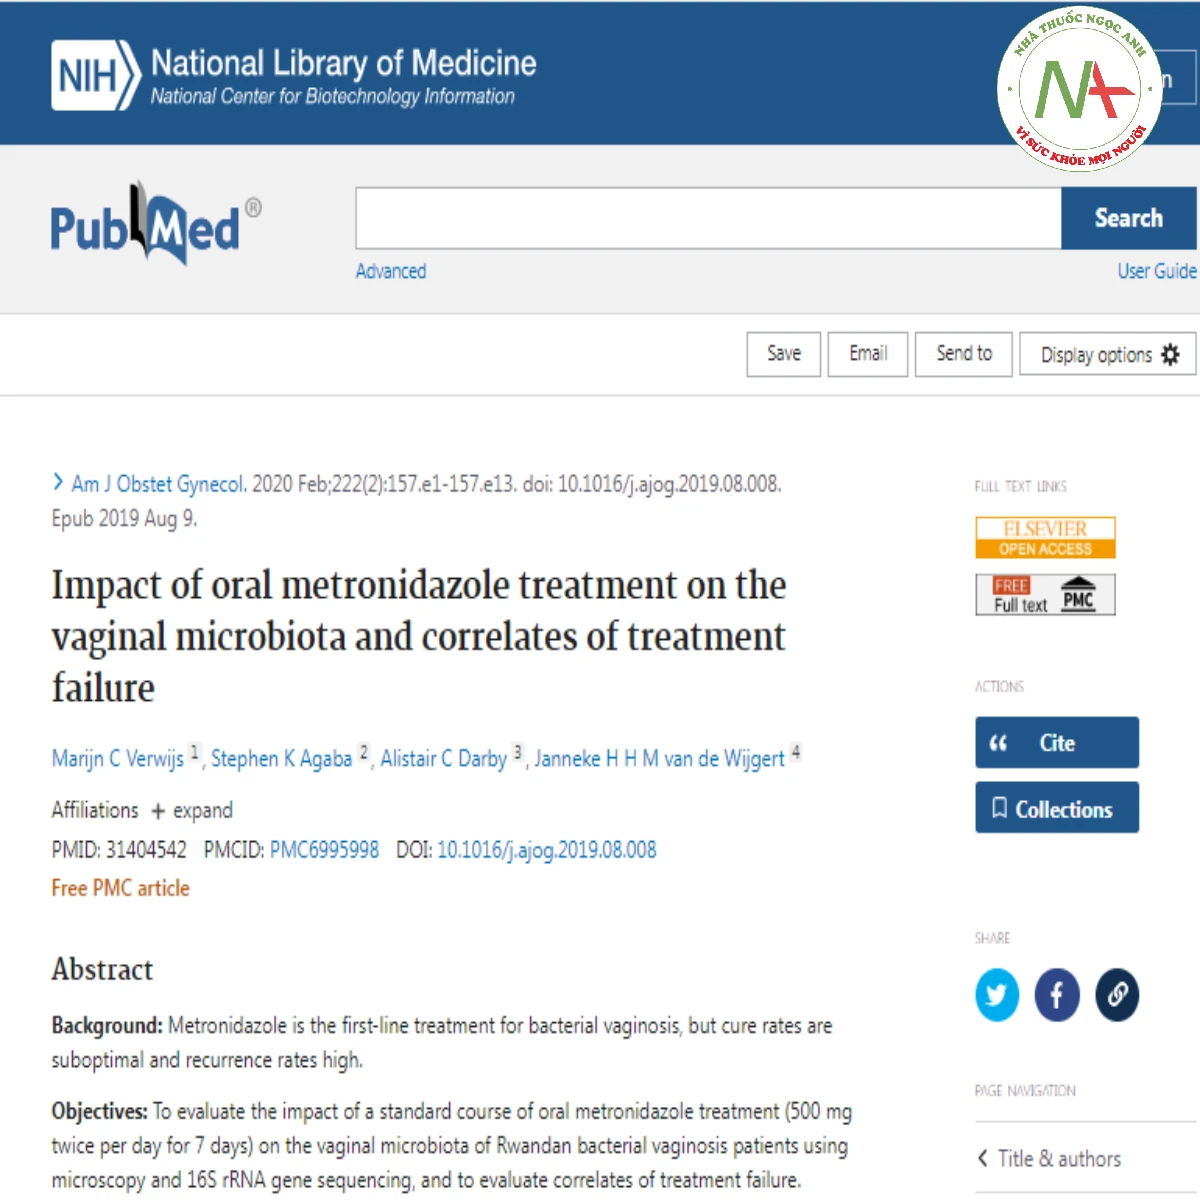 Impact of oral metronidazole treatment on the vaginal microbiota and correlates of treatment failure